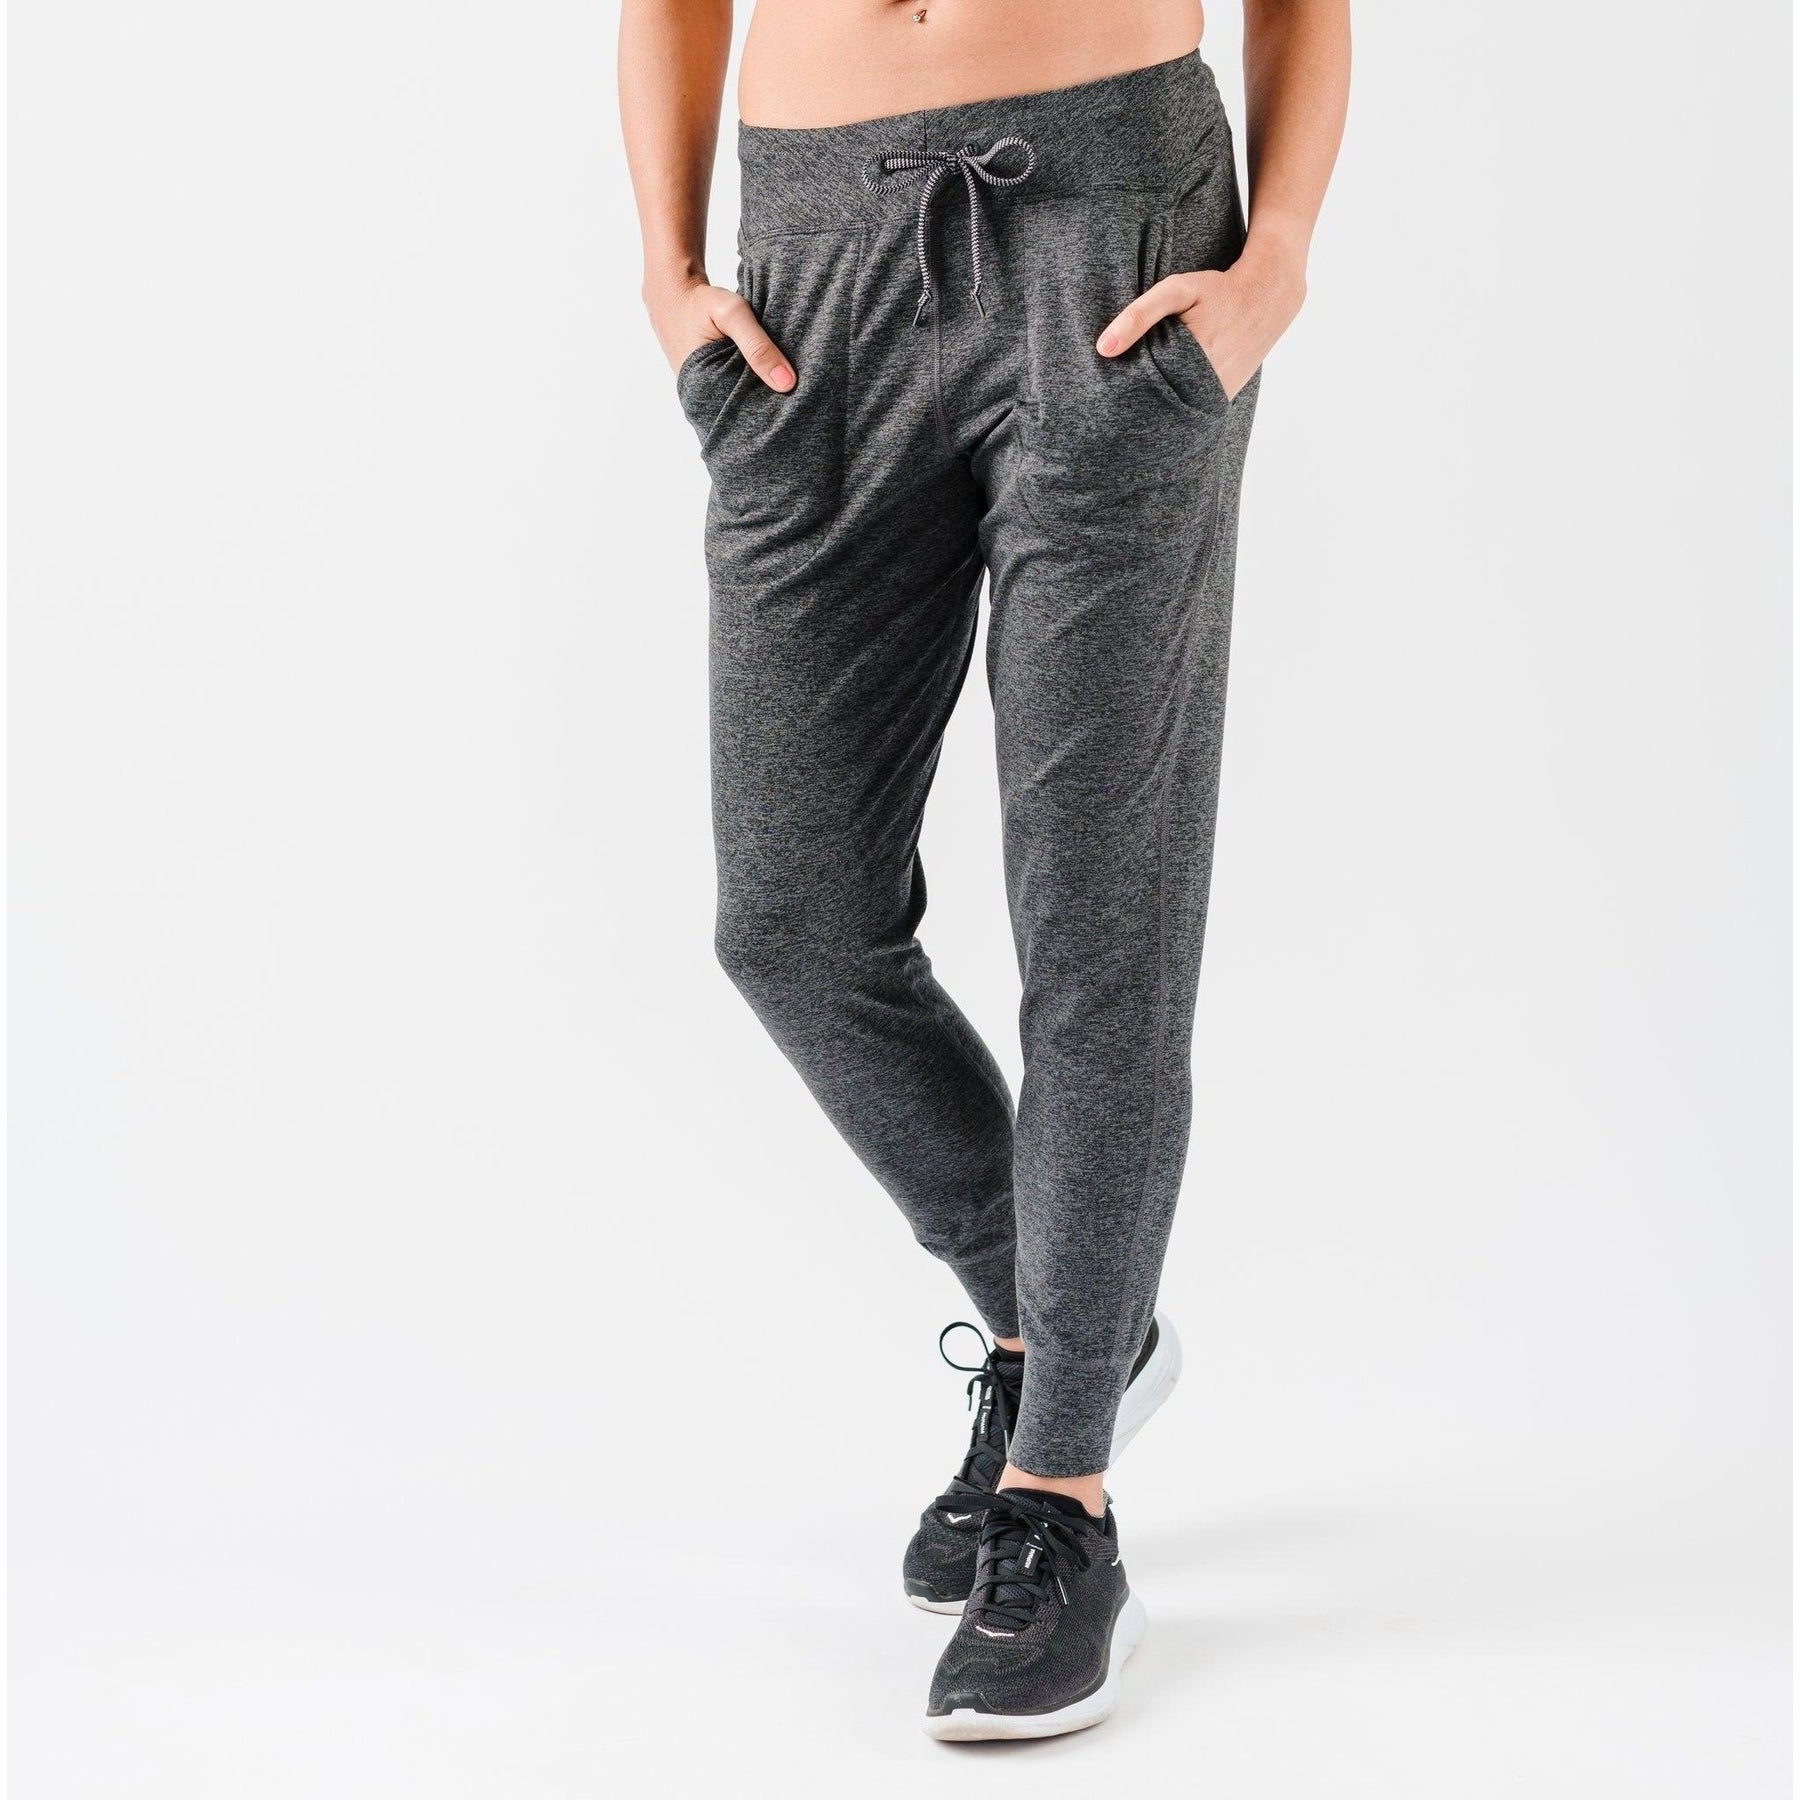 Nike sweatpants charcoal / black, No flaws, Size Large